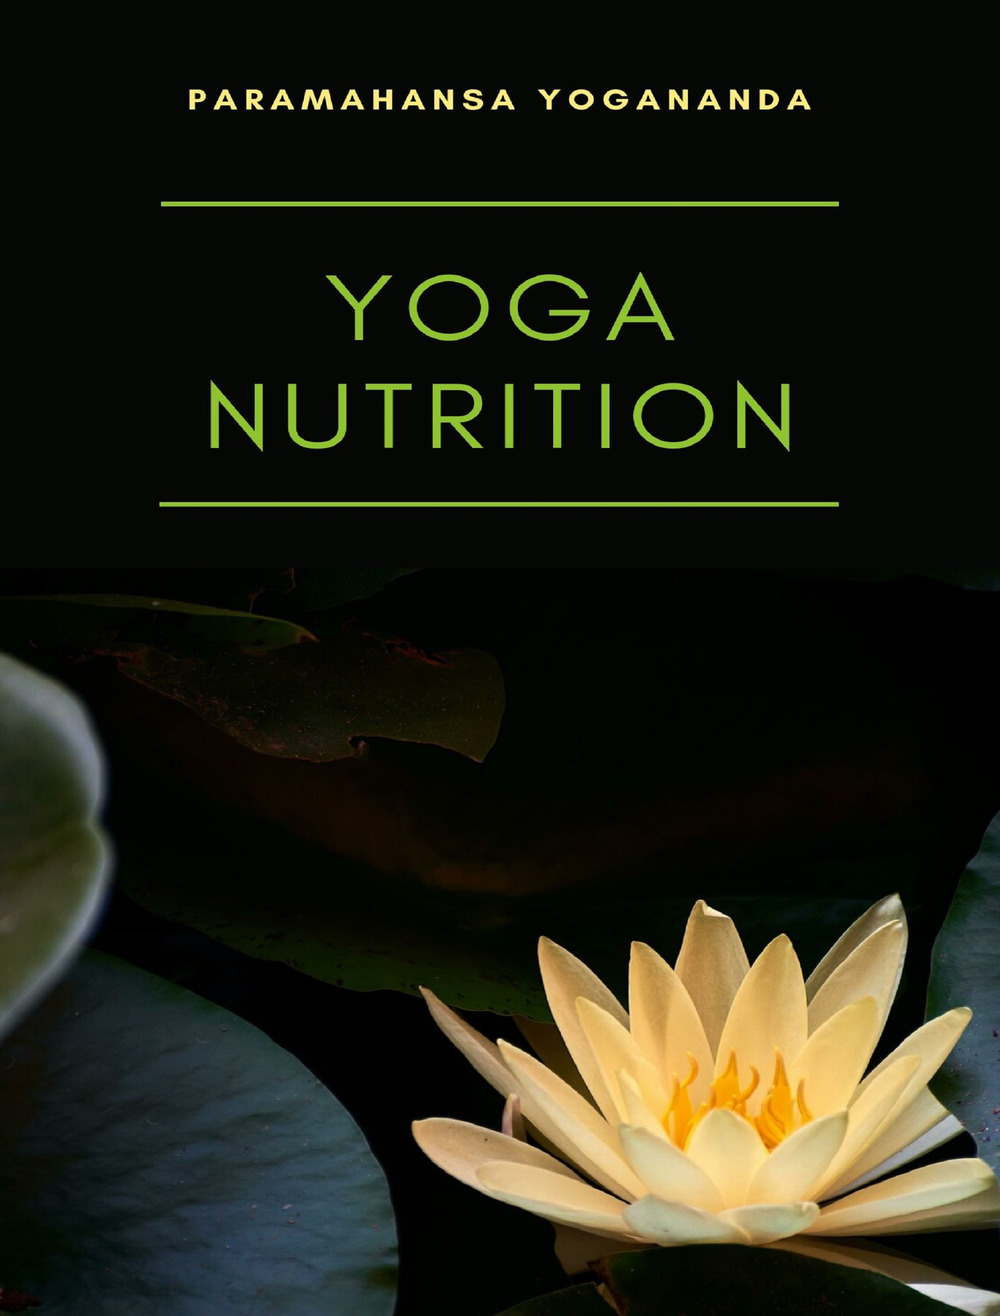 Yoga nutrition